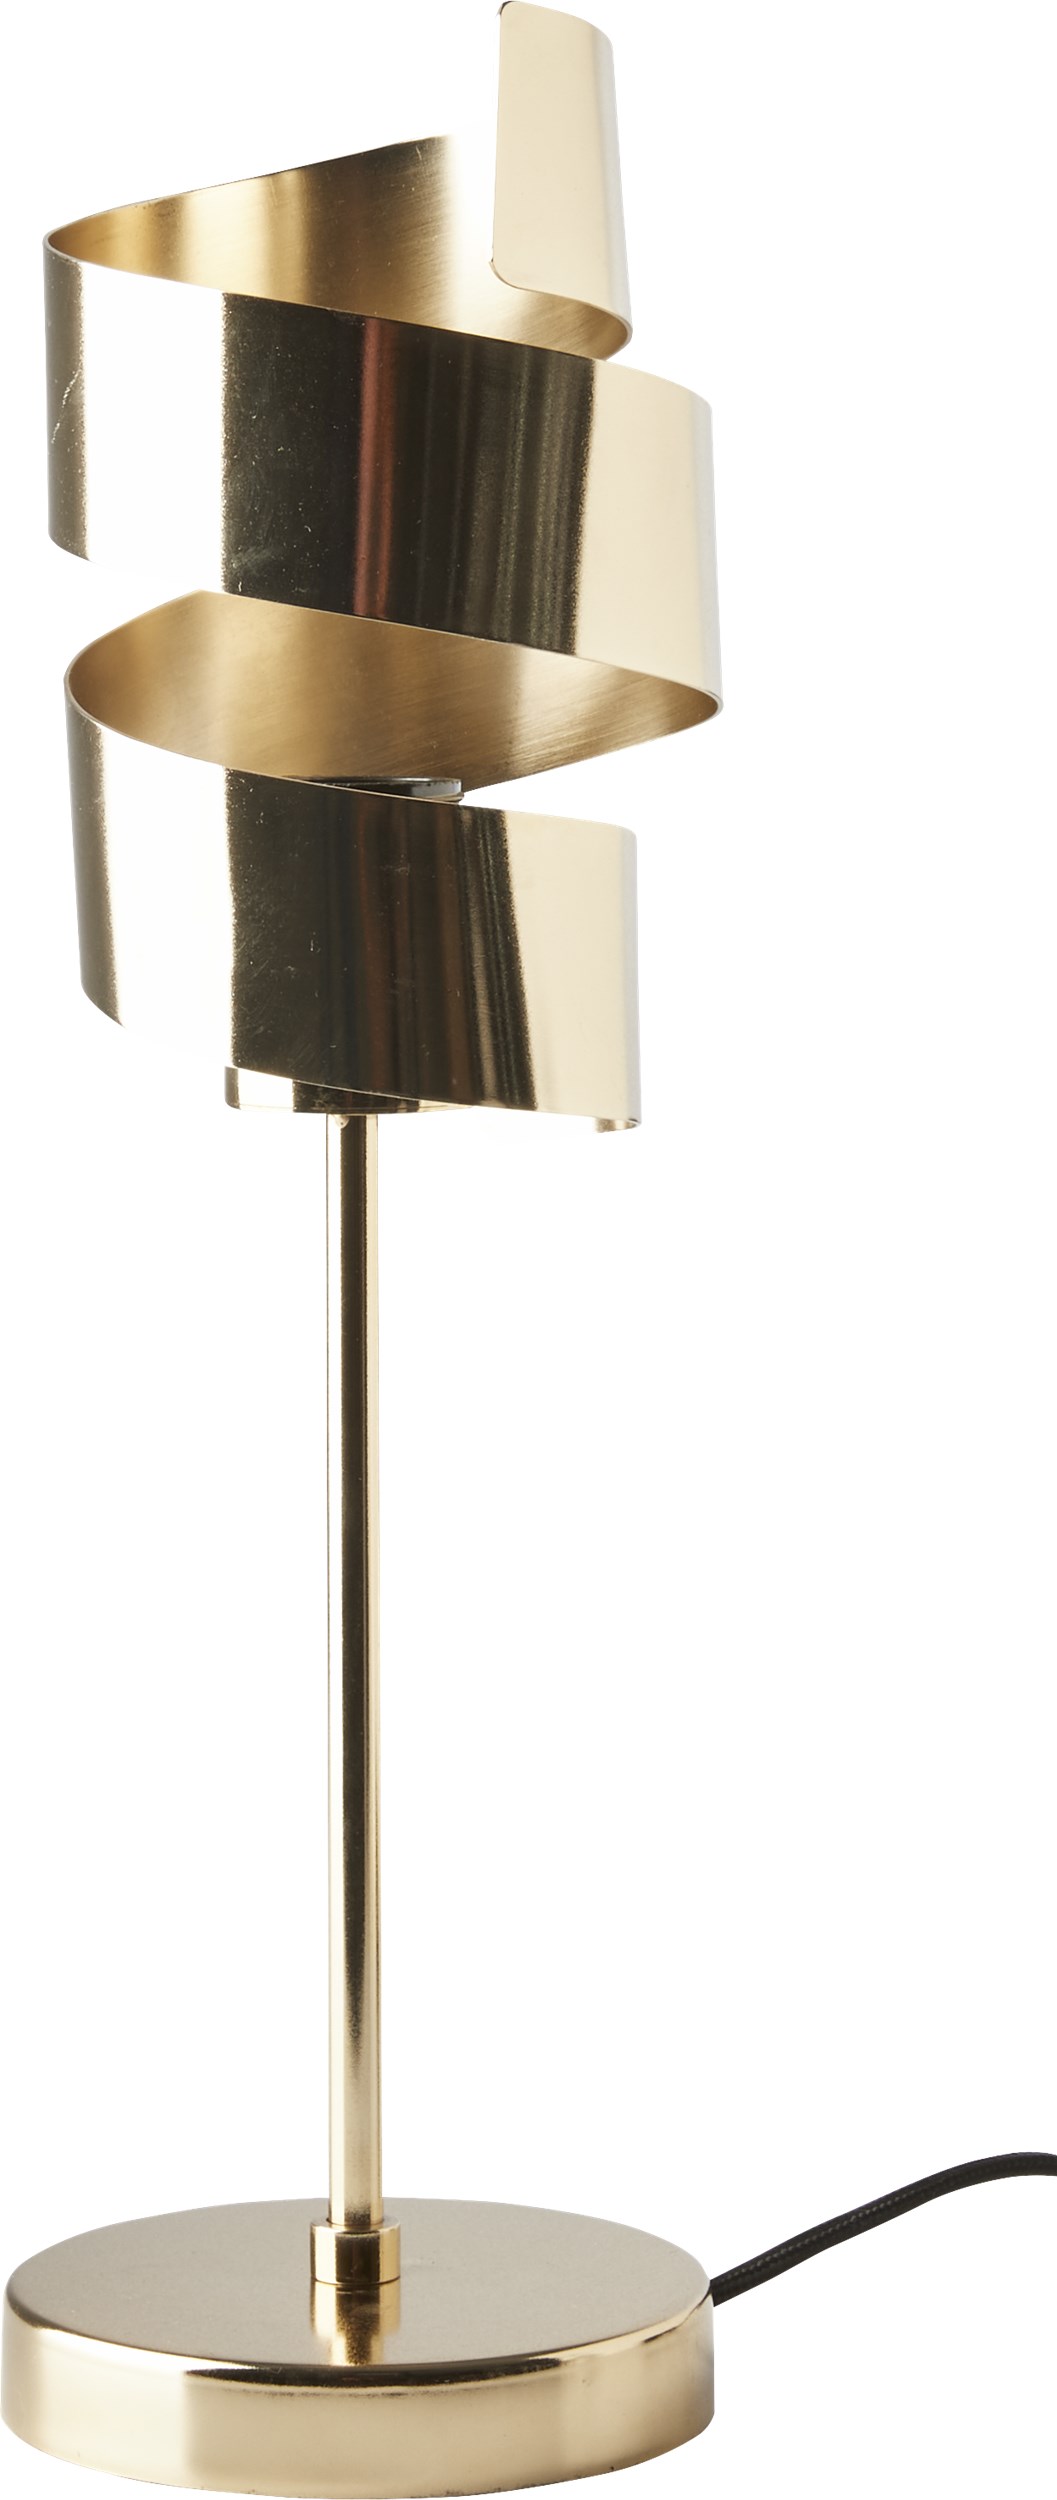 Twister Bordslampa 40 x 14 cm - Mässingsfärgad metall och Svart tygsladd